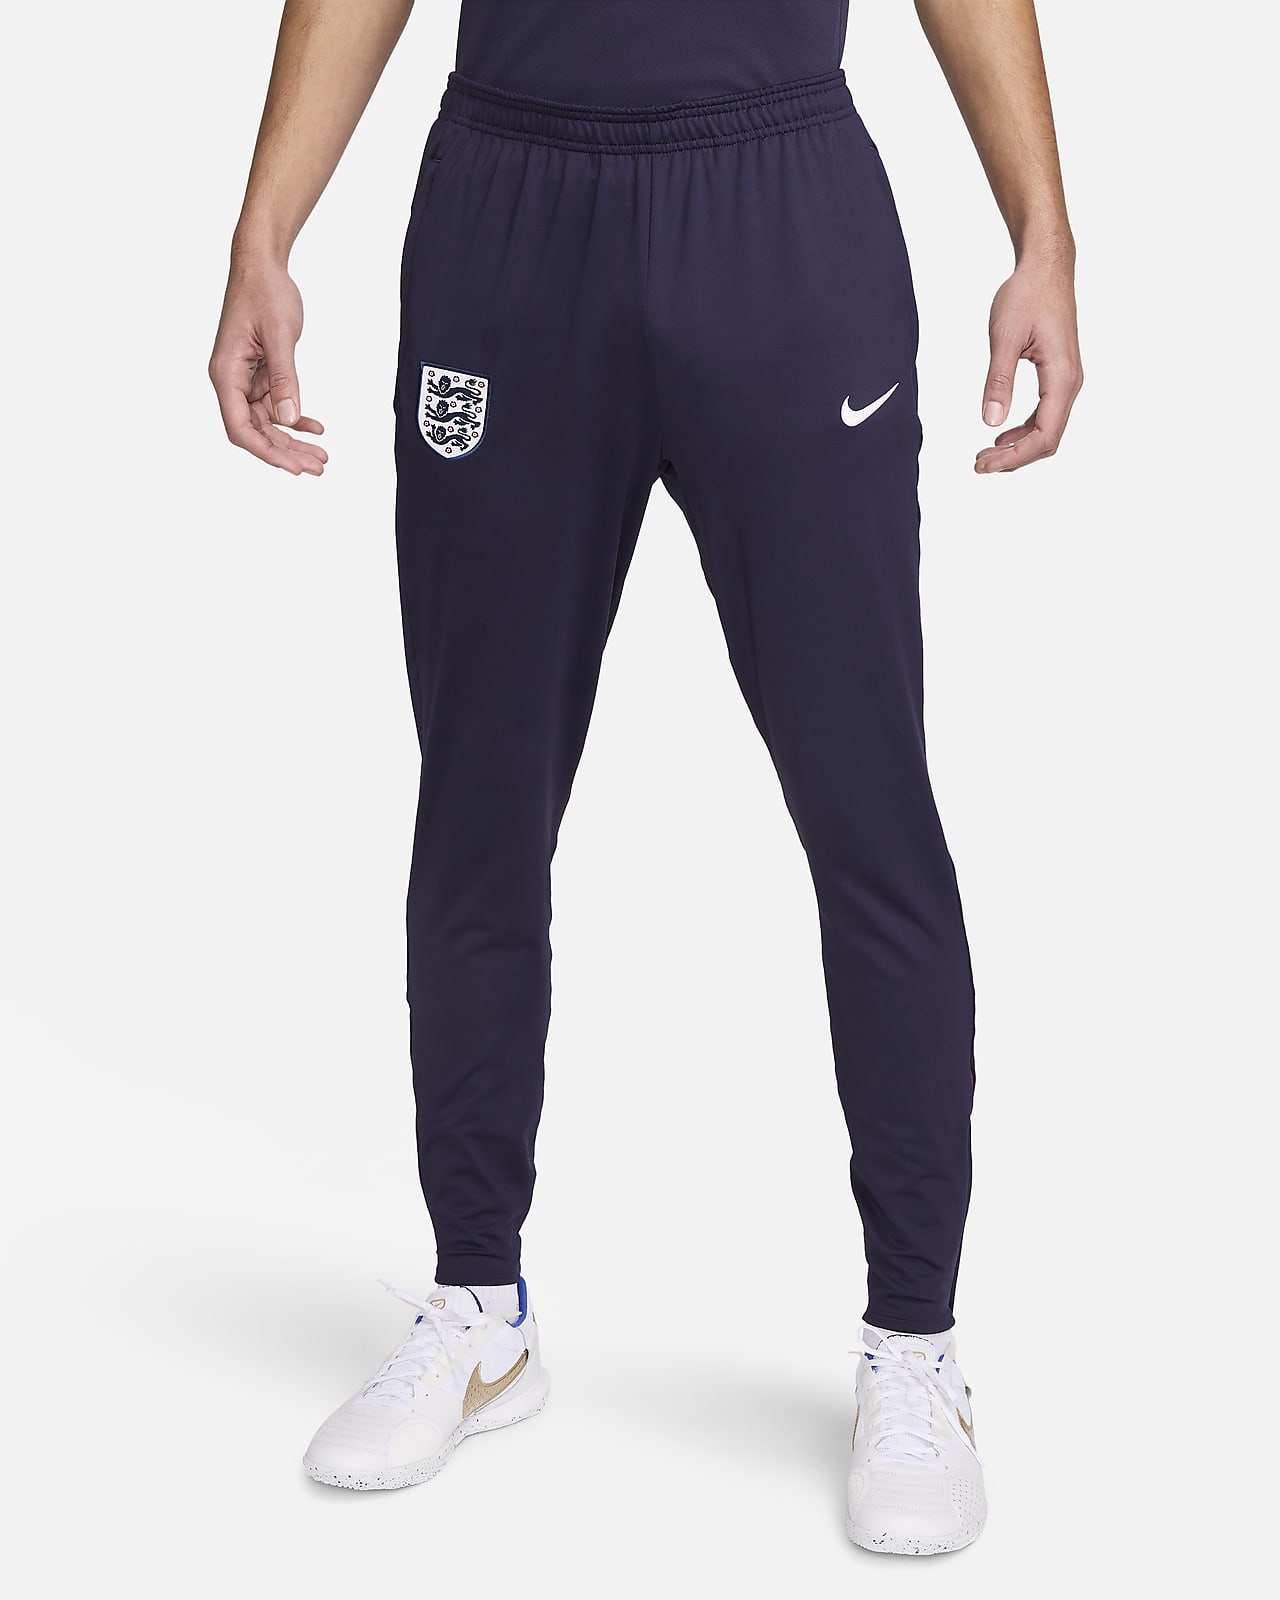 Anglia Strike Nike Dri-FIT kötött férfi futballnadrág